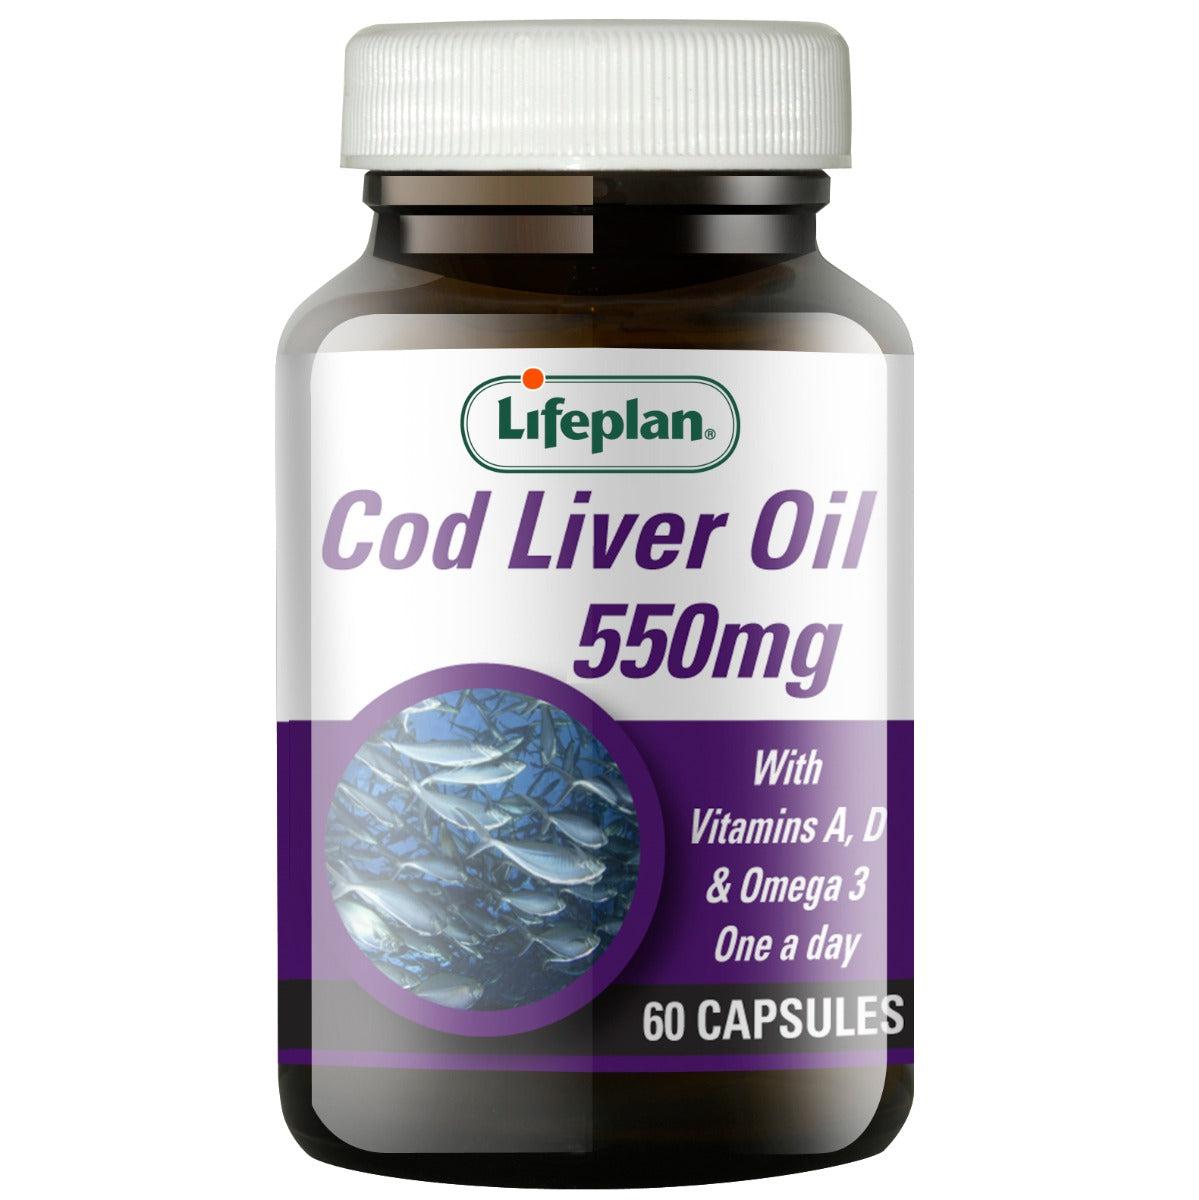 Lifeplan Cod Liver Oil 550mg 60 Capsules